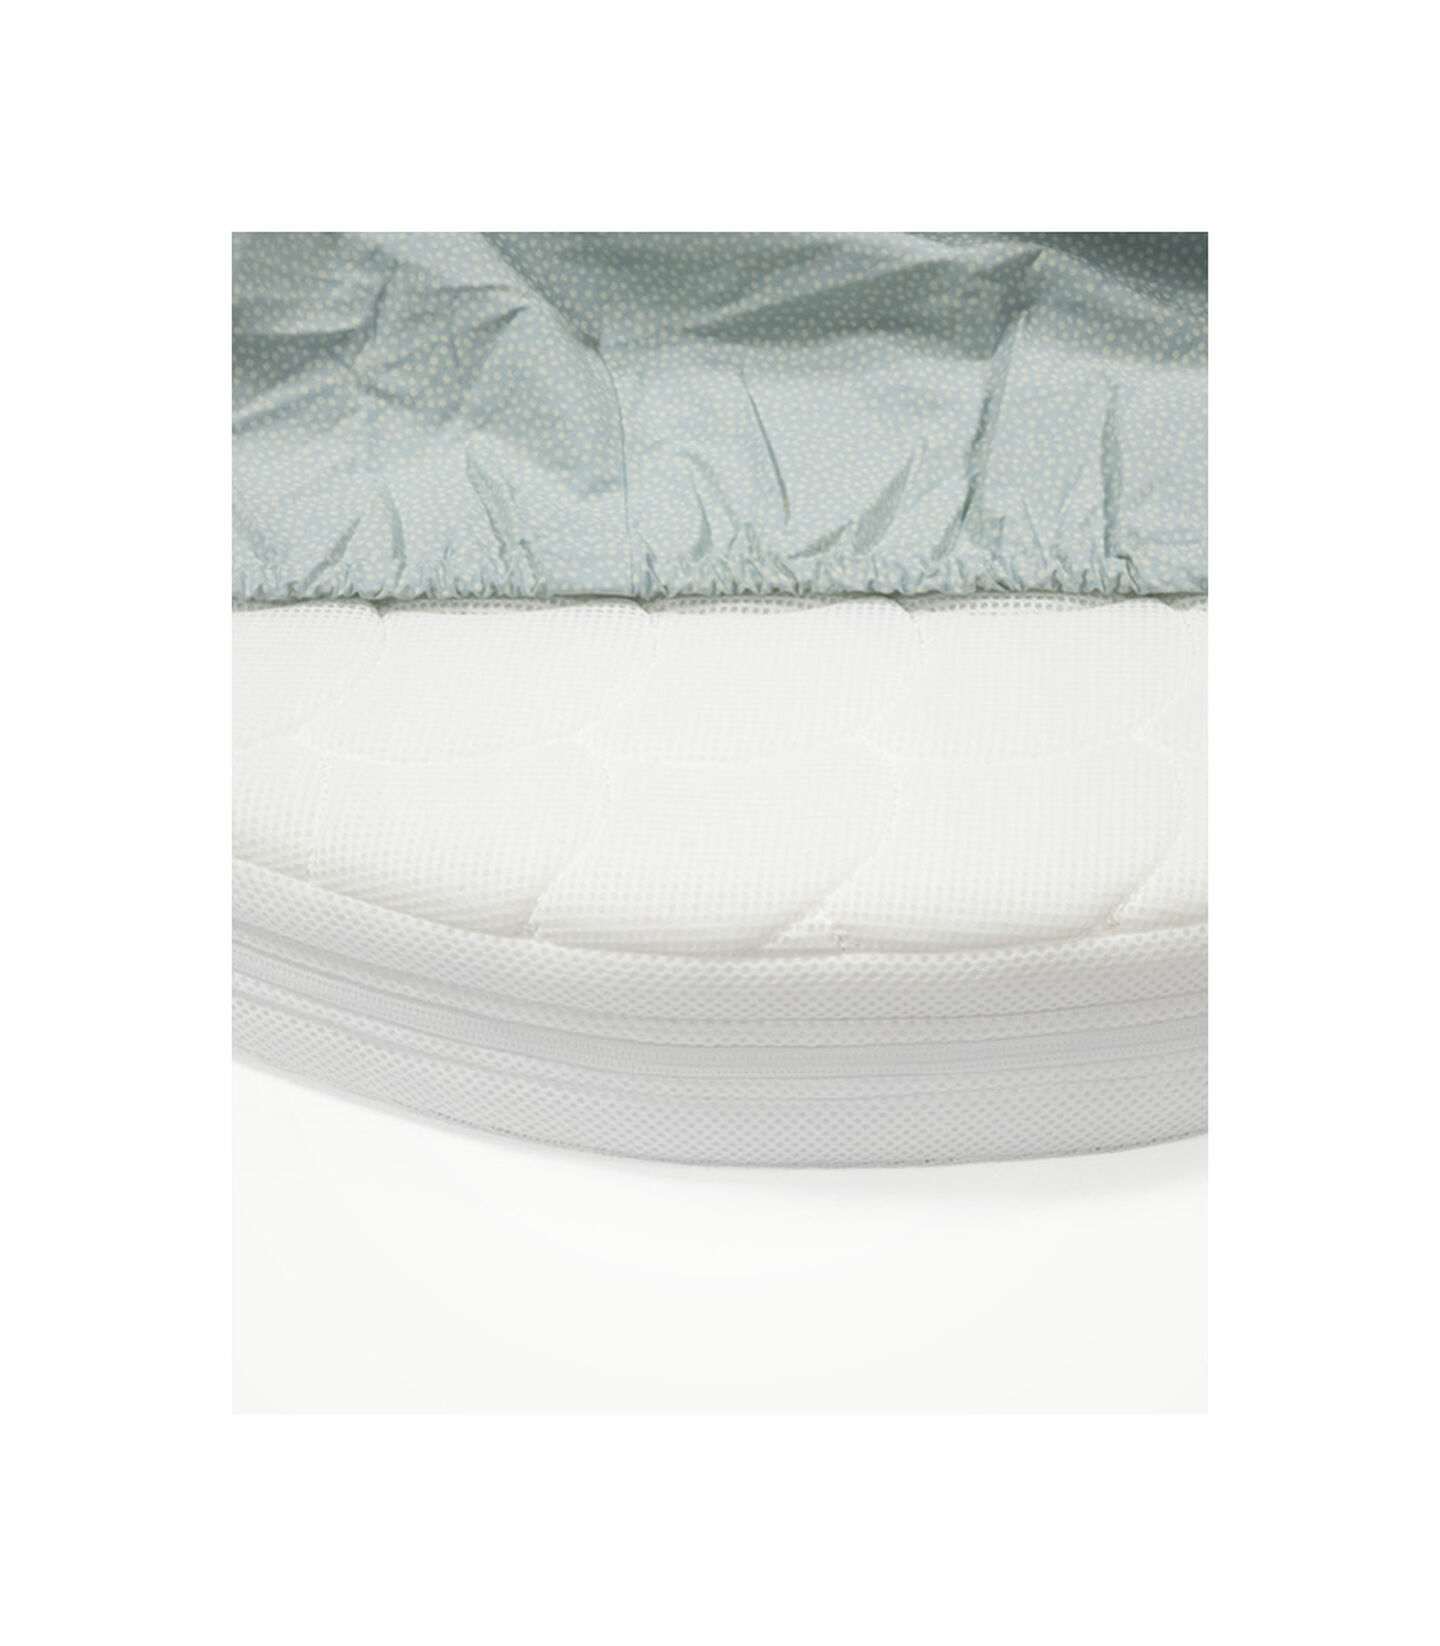 Stokke® Sleepi™ Bed Fitted Sheet V3 White, White, mainview view 3